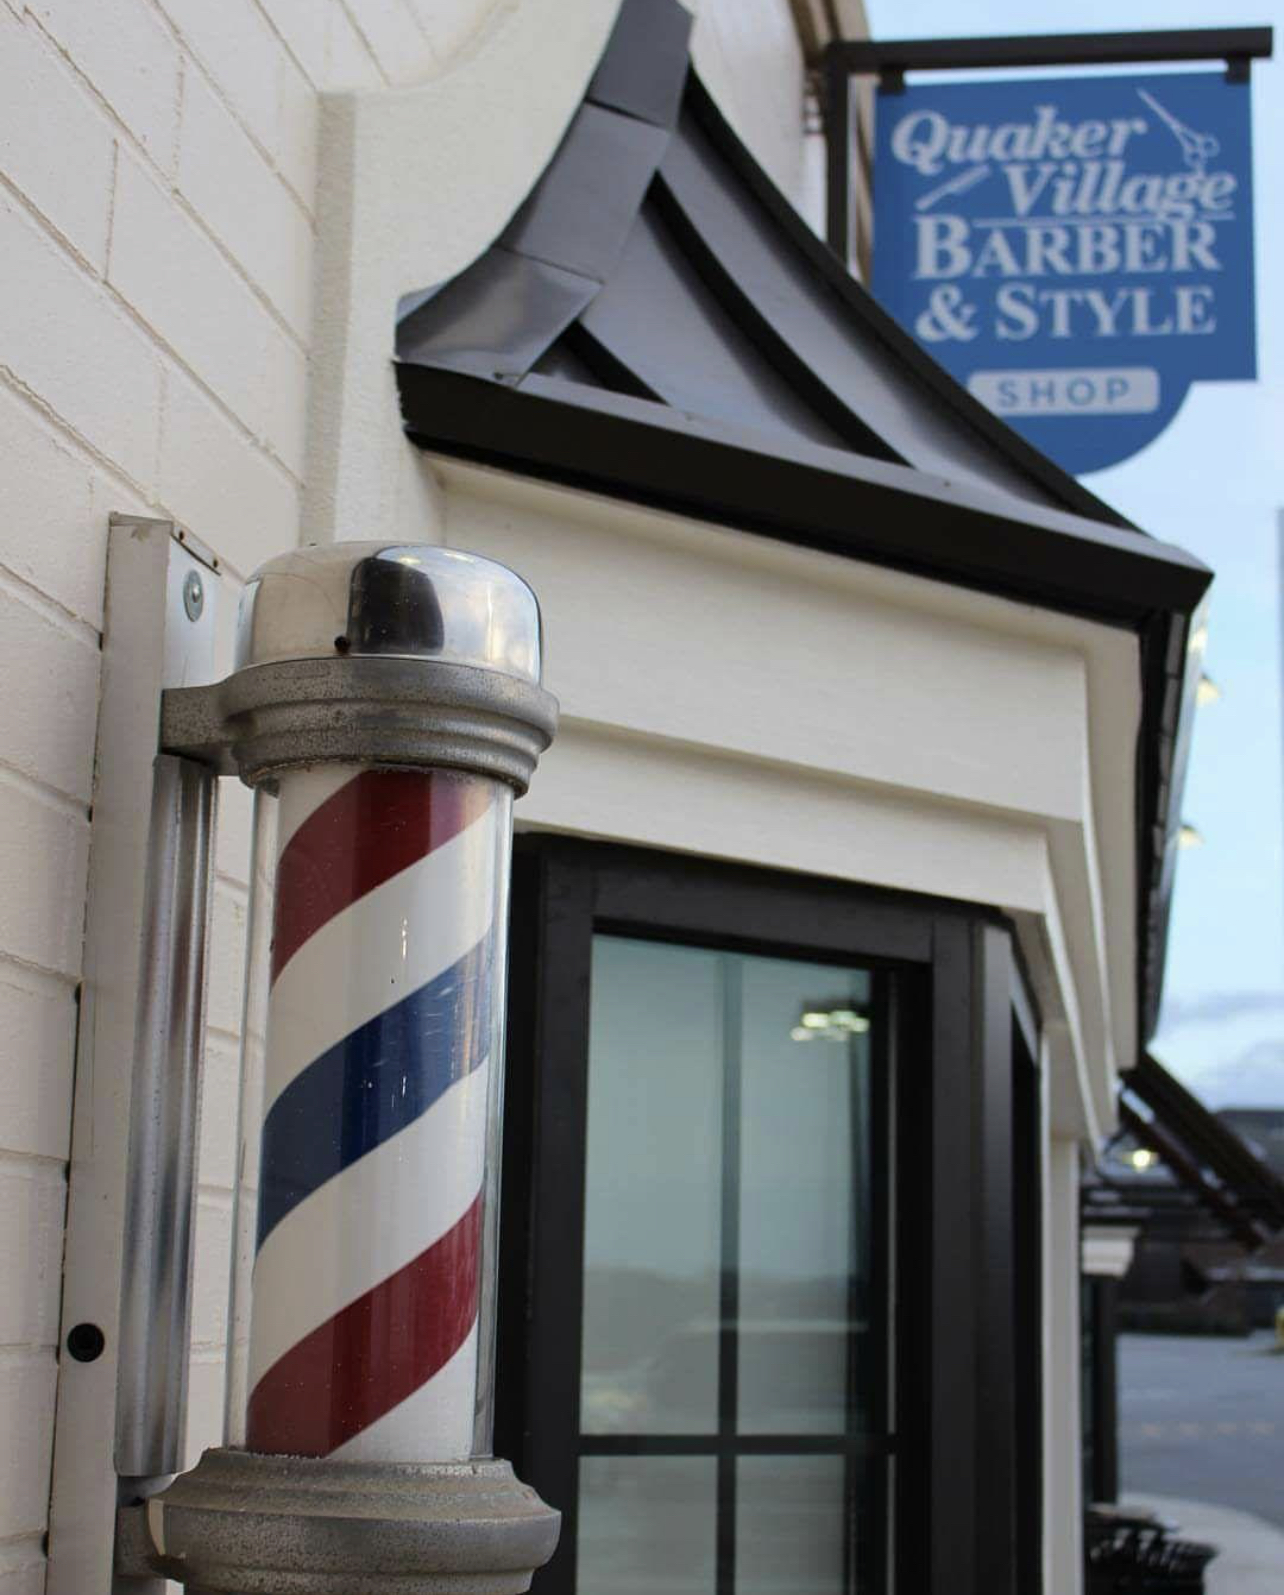 Quaker Village Barber & Style Shop